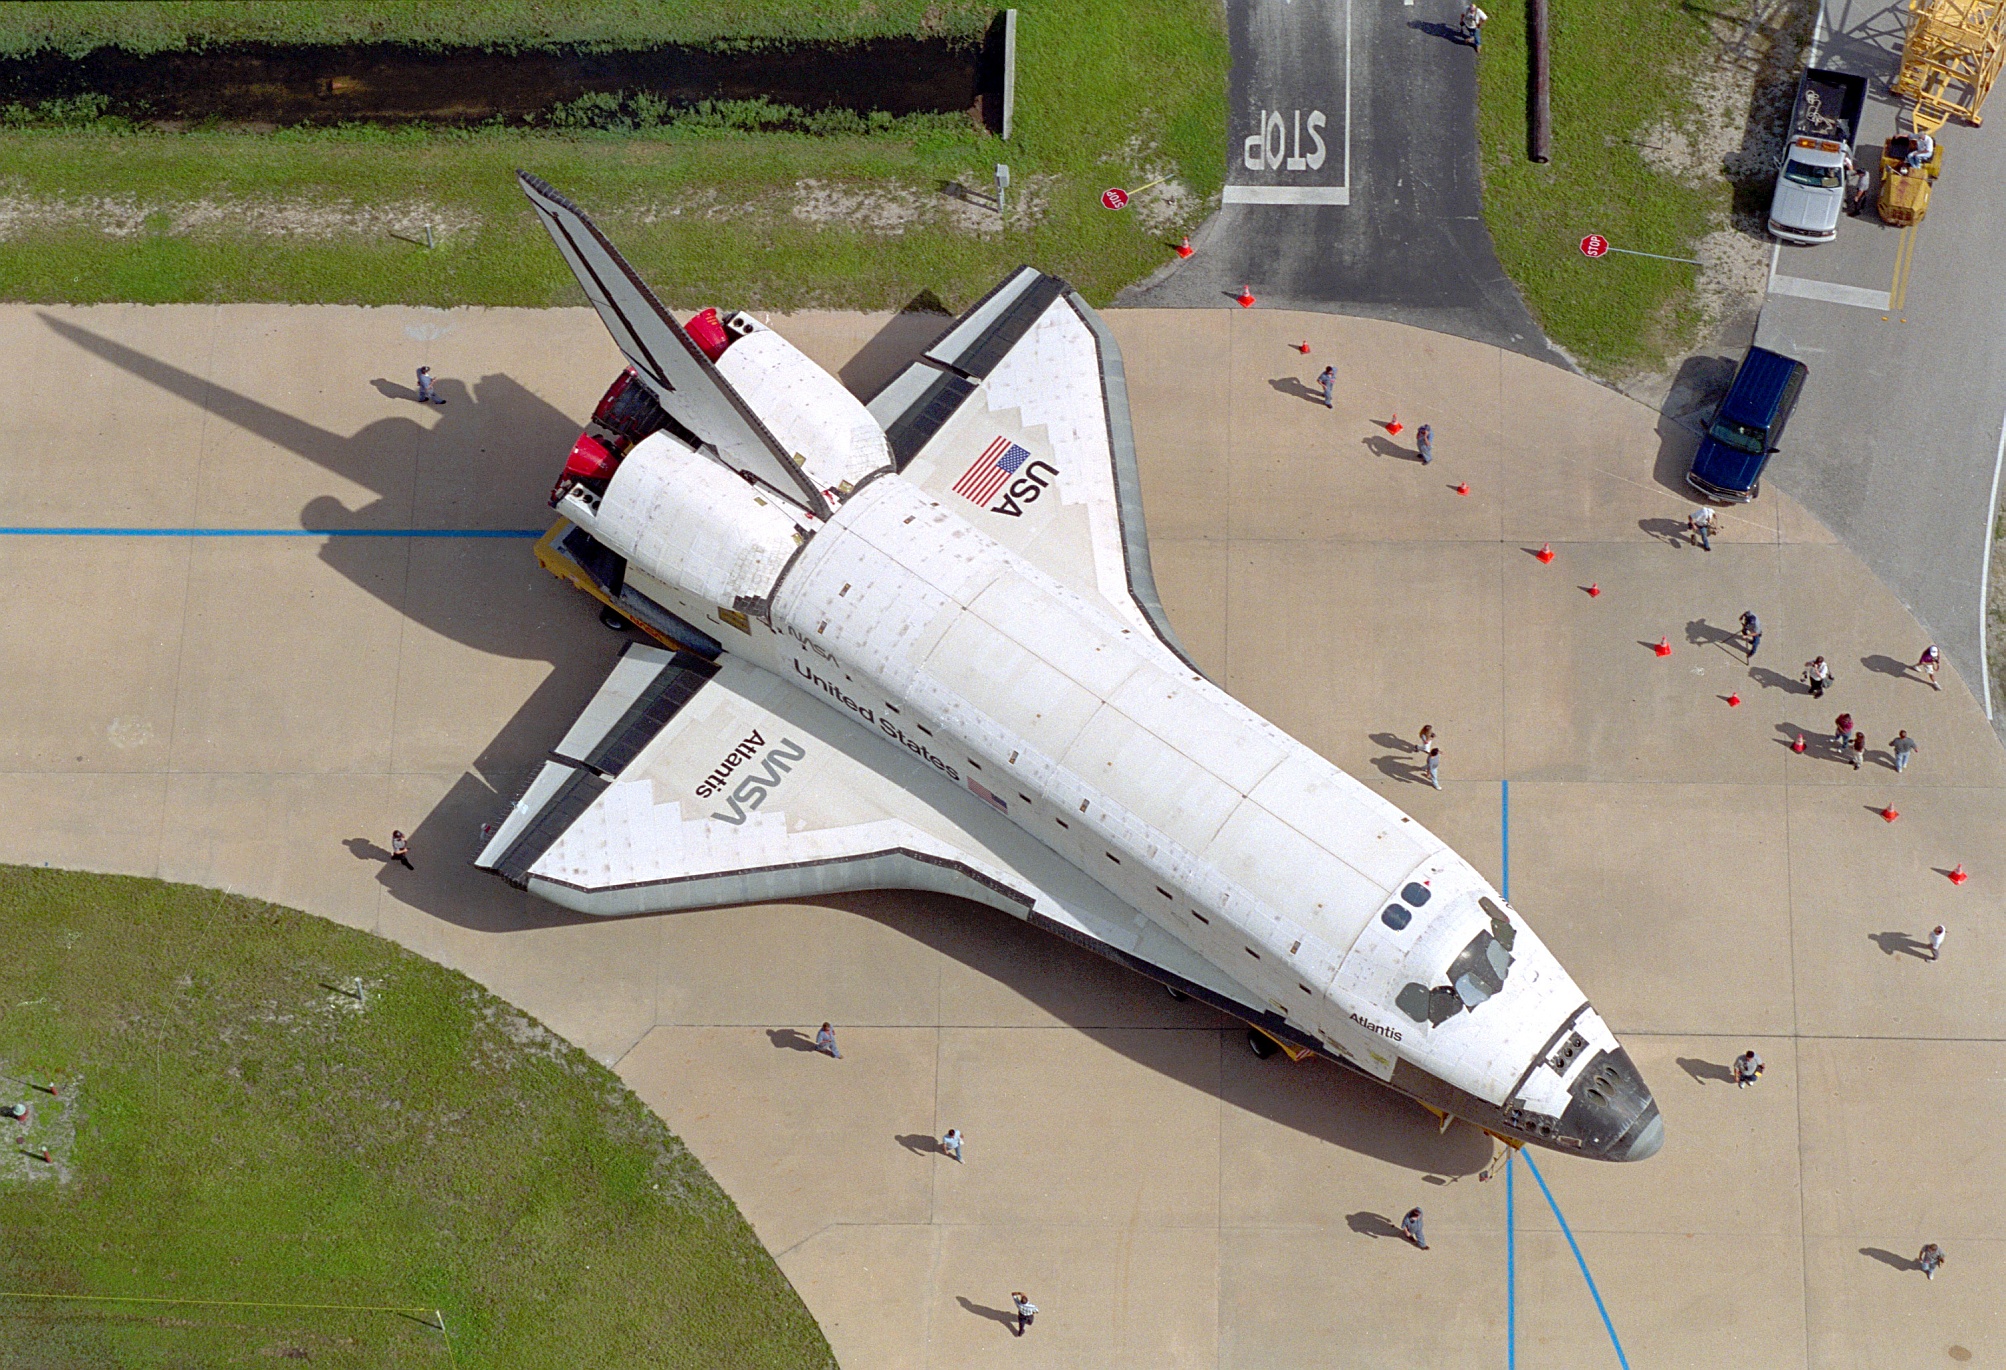 gpw-20051129-NASA-GPN-2000-000796-Space-Shuttle-Atlantis-STS-86-rollover-John-F-Kennedy-Space-Center-Florida-19970811-medium.jpg